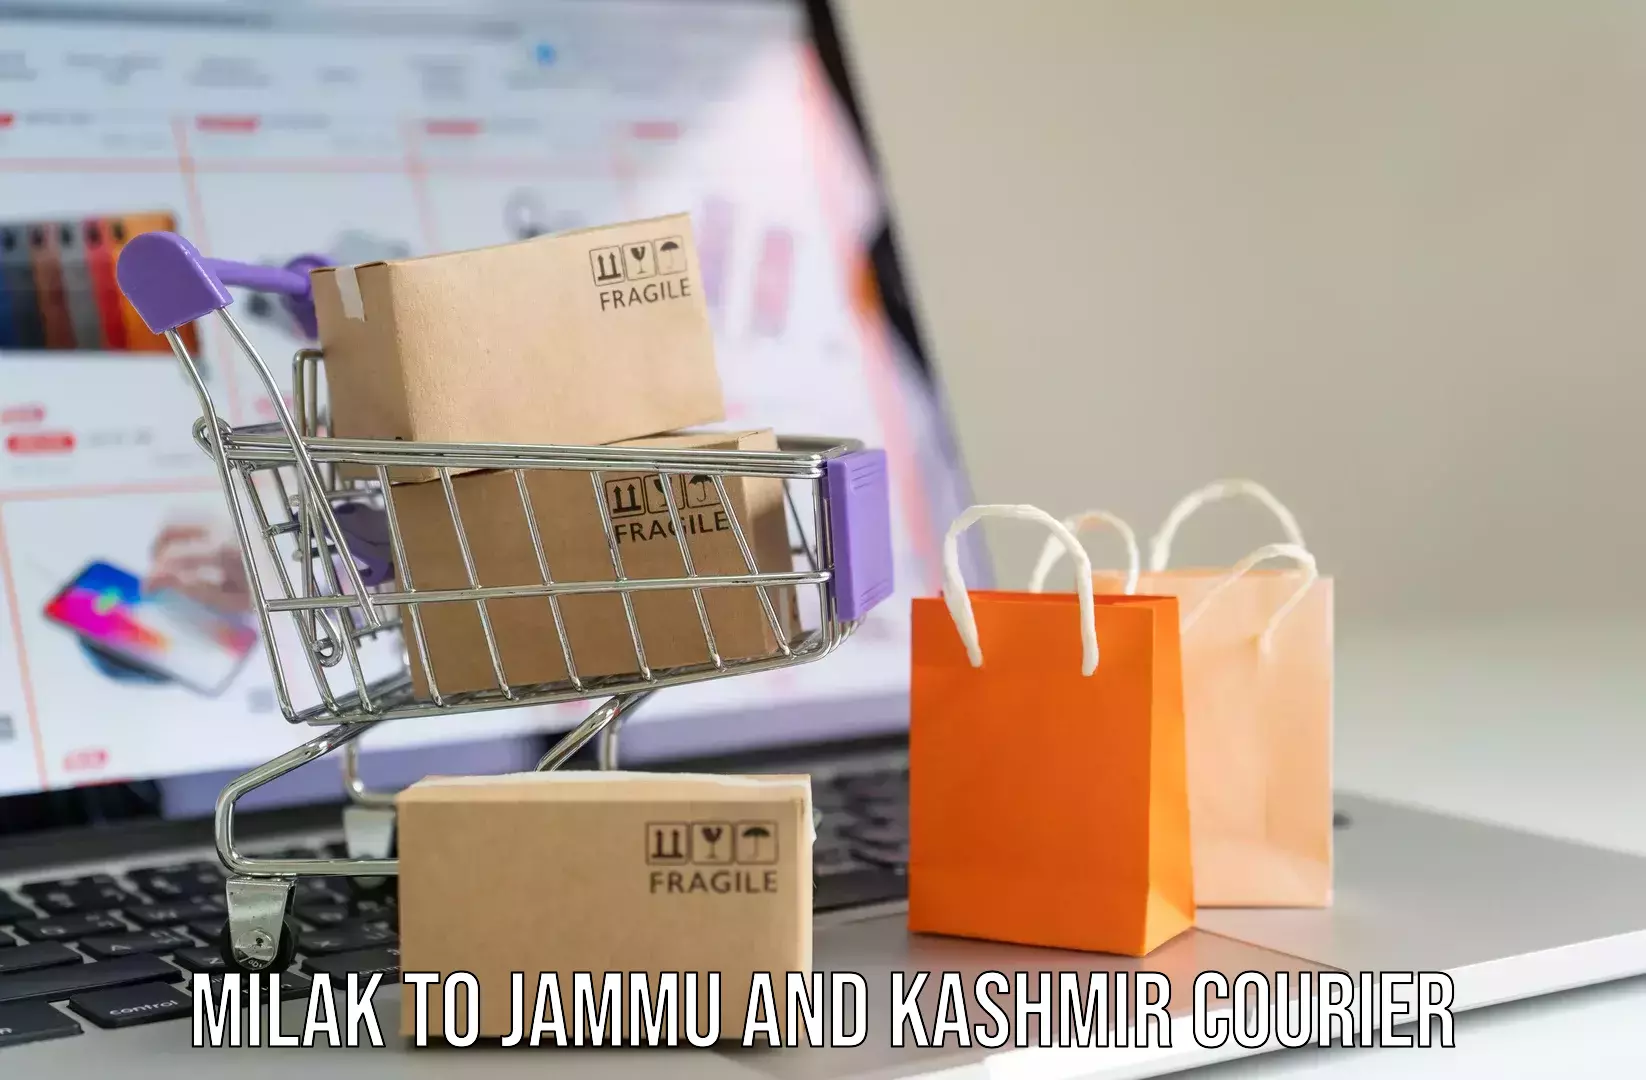 Emergency baggage service Milak to University of Jammu